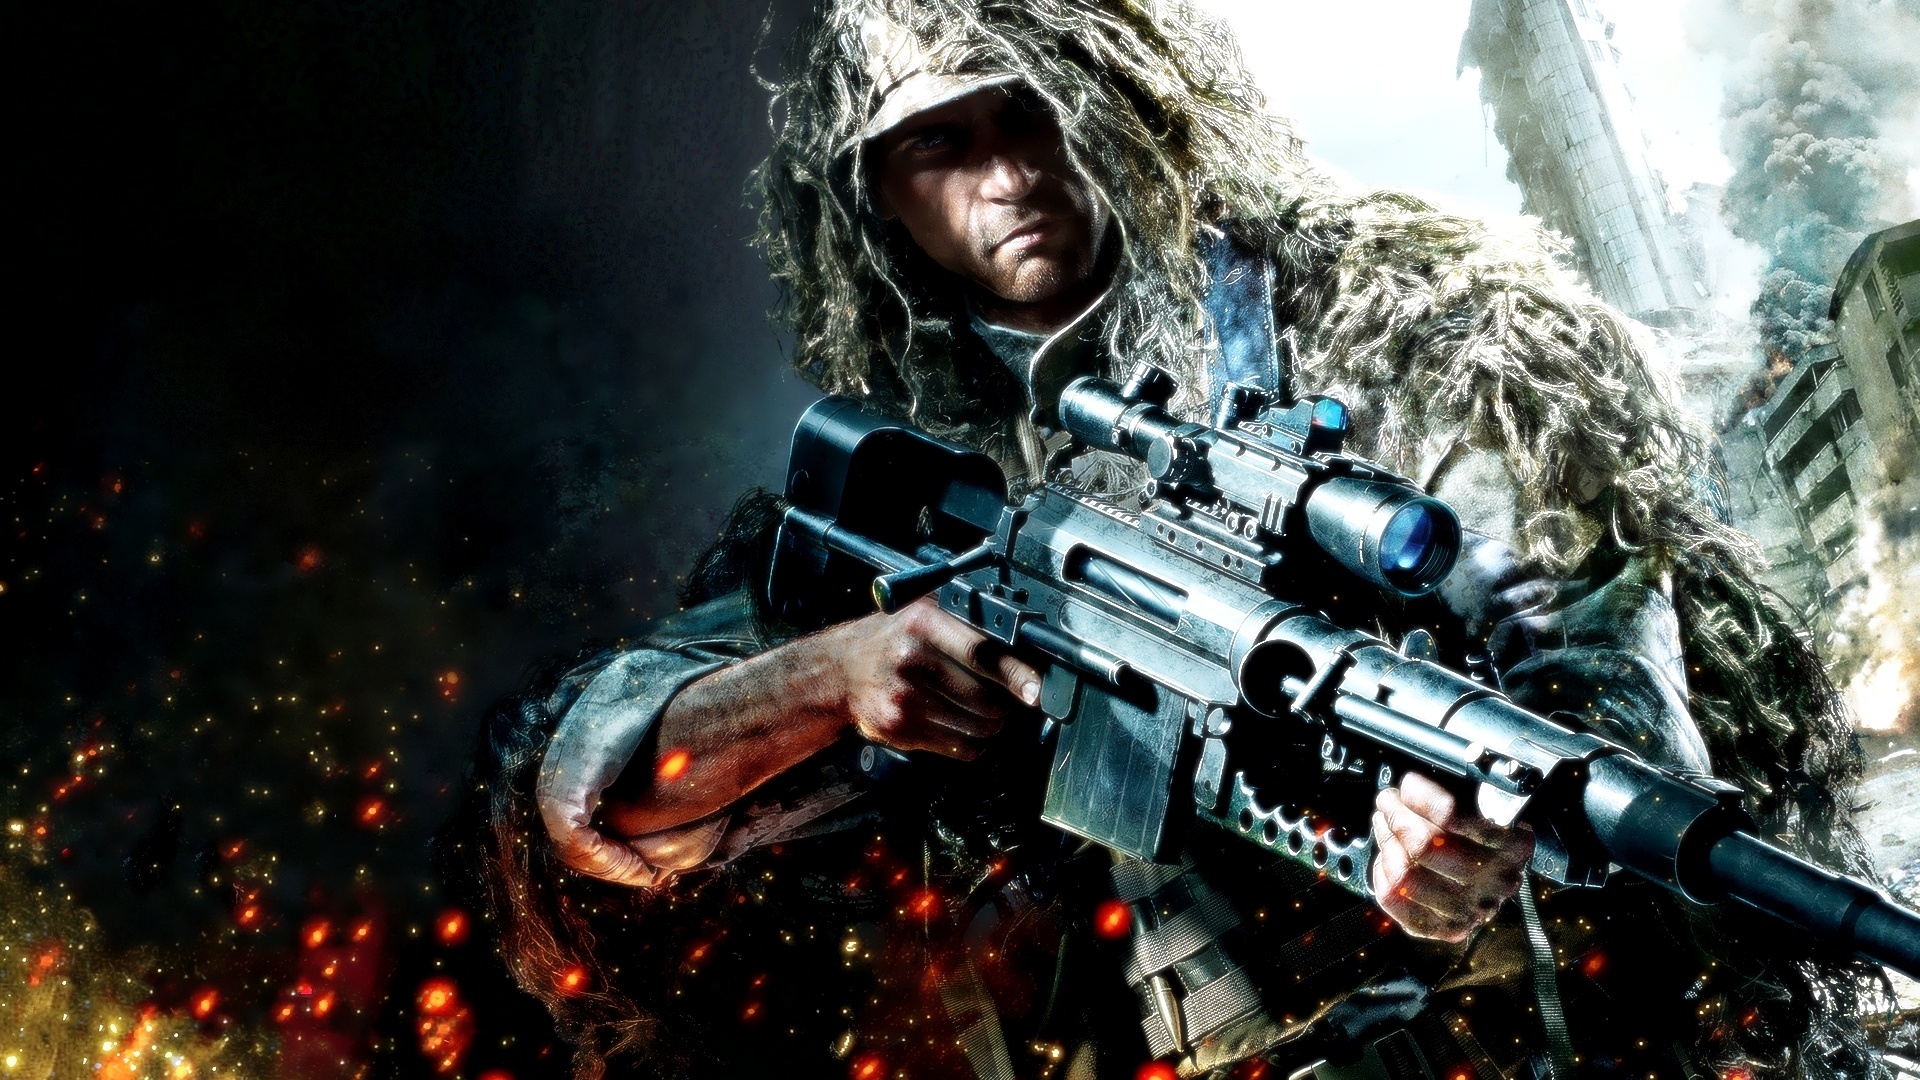 Sniper-Wallpaper-Warrior-game-rifle.jpg